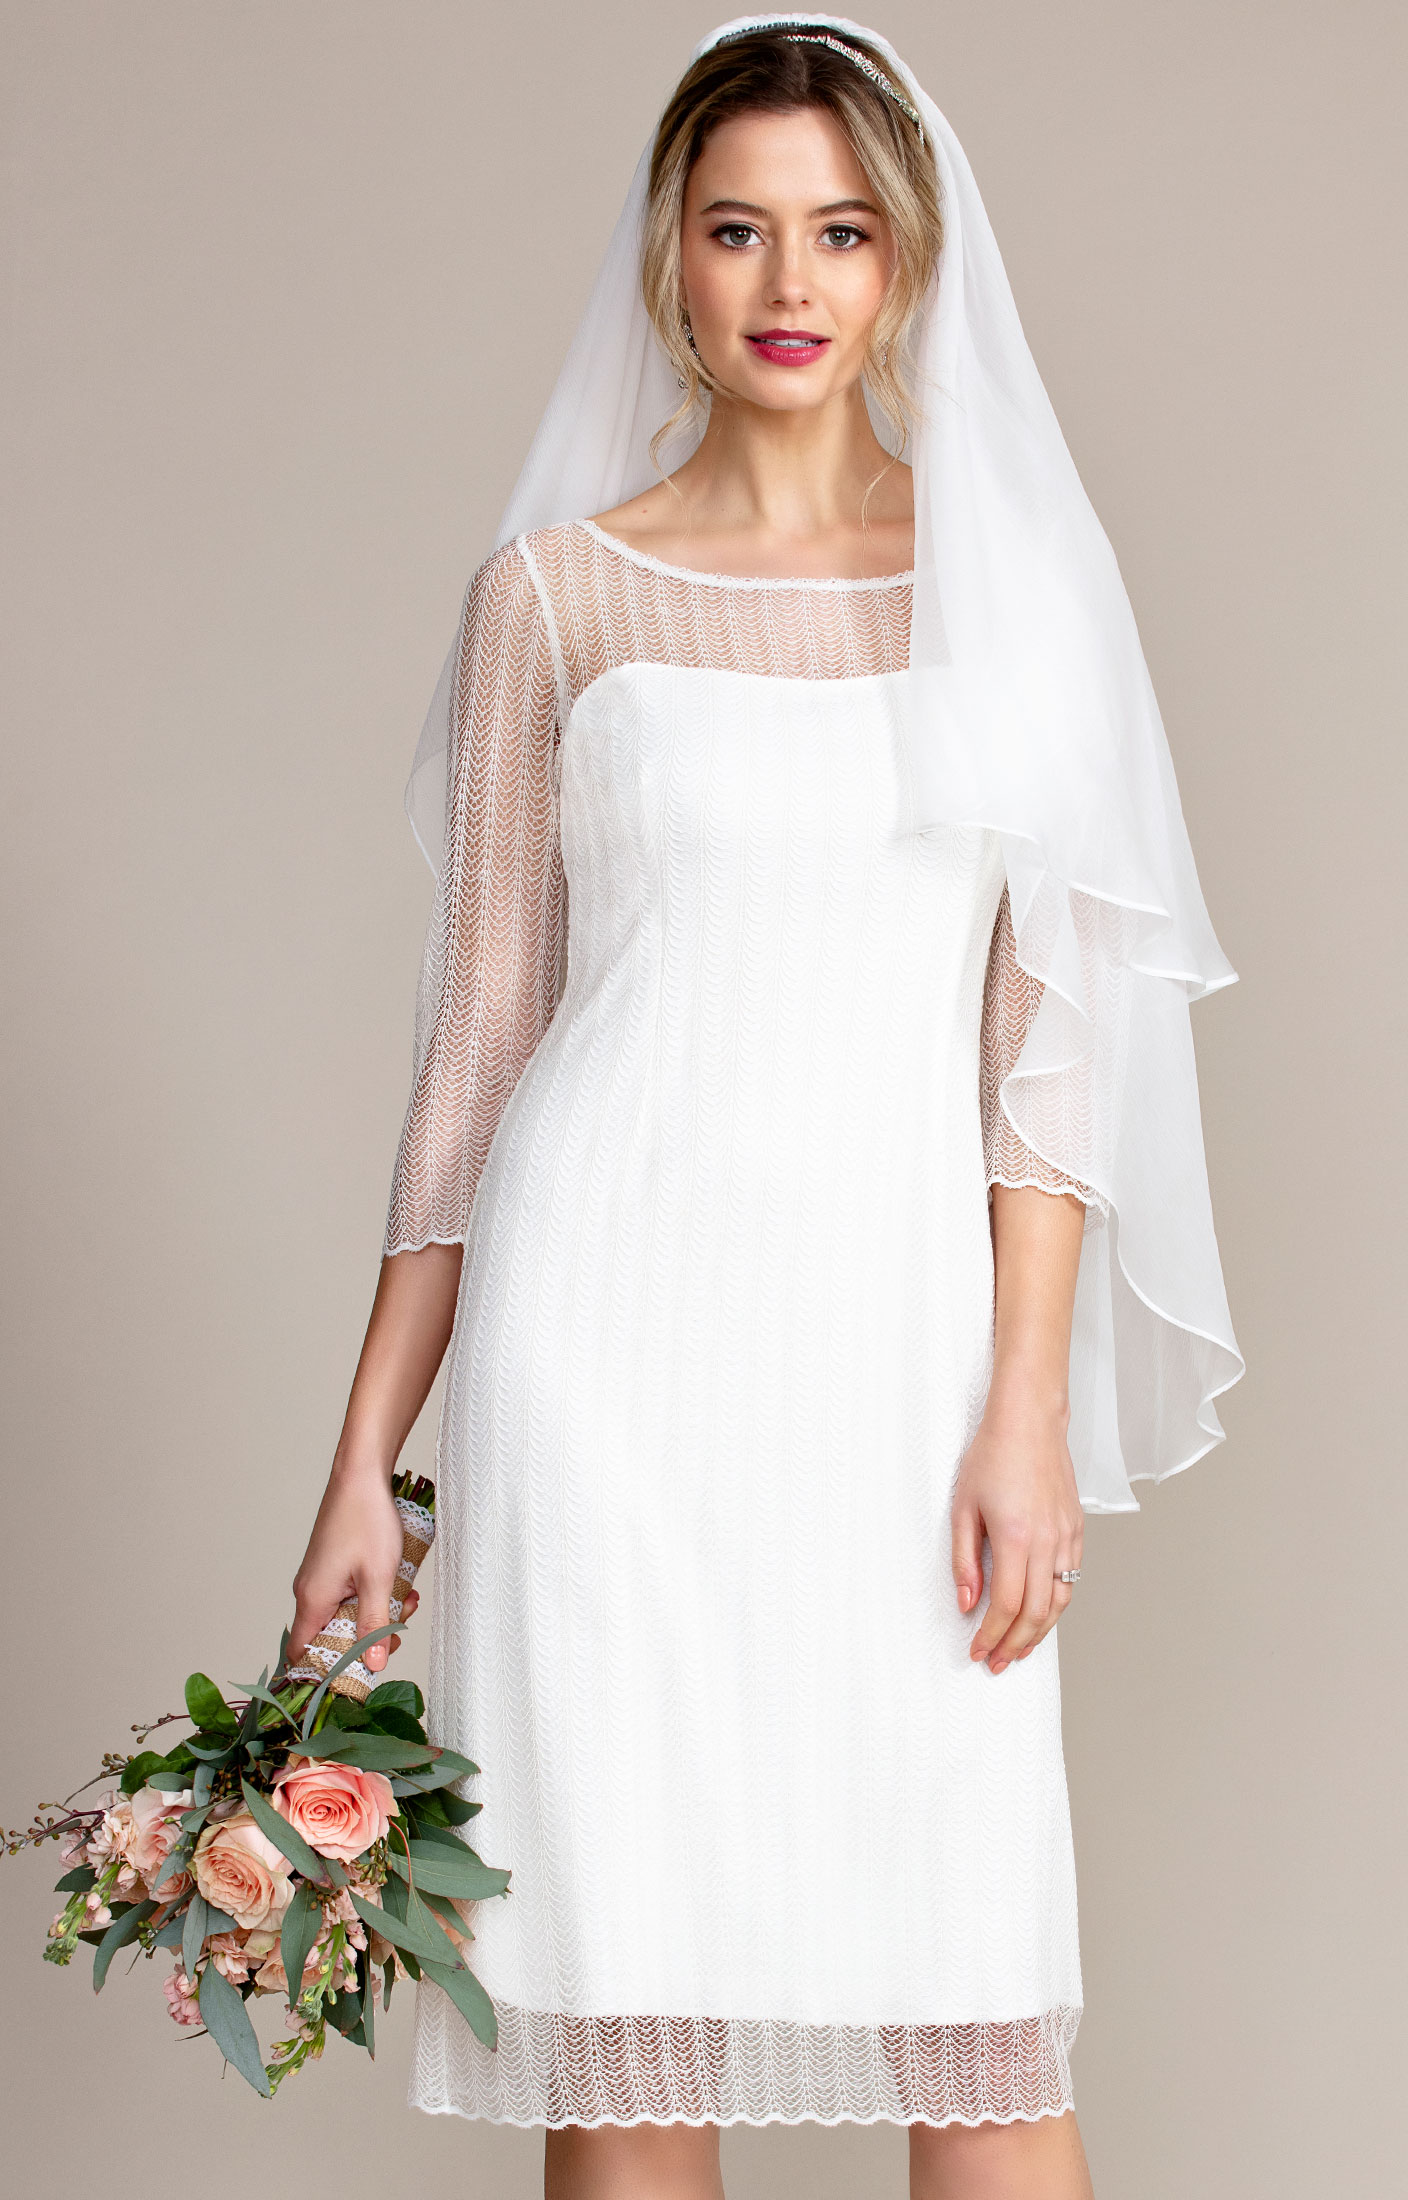 Woman in underwear and Sheath wedding dress. Stock Vector